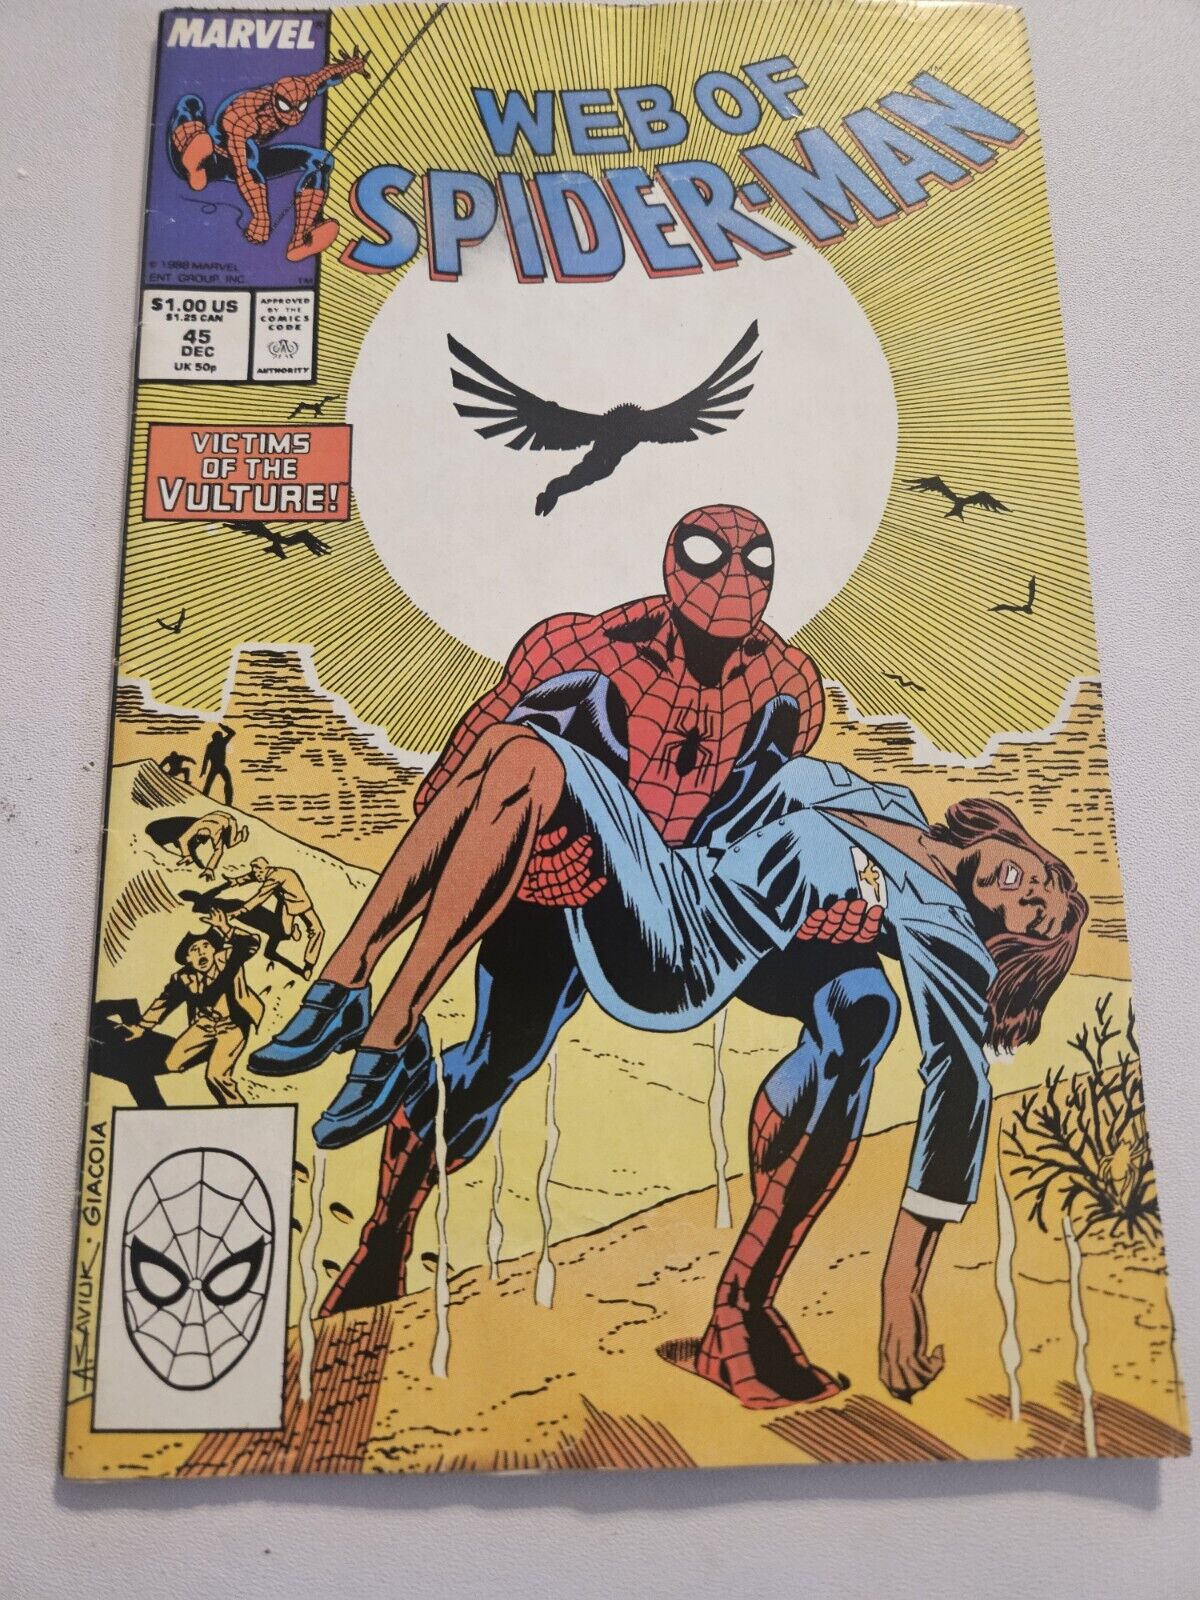 WEB OF SPIDER-MAN #45  MARVEL COMICS 1988 VG